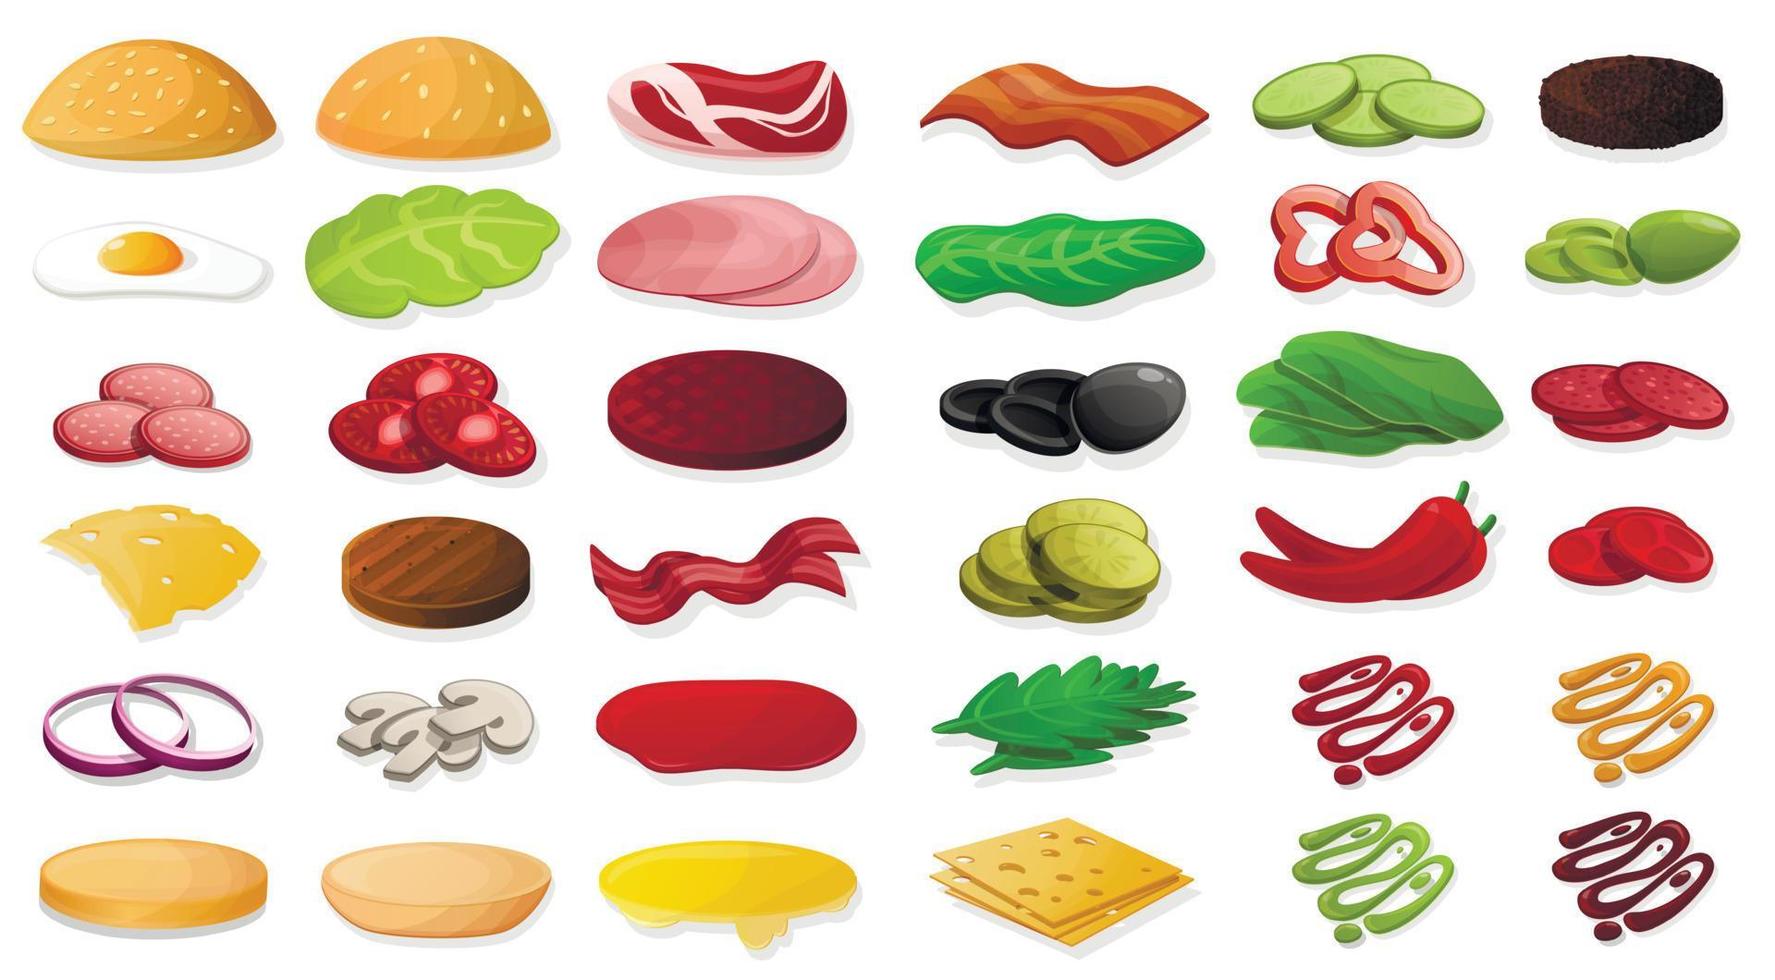 hamburger element voedsel pictogrammenset, cartoon stijl vector